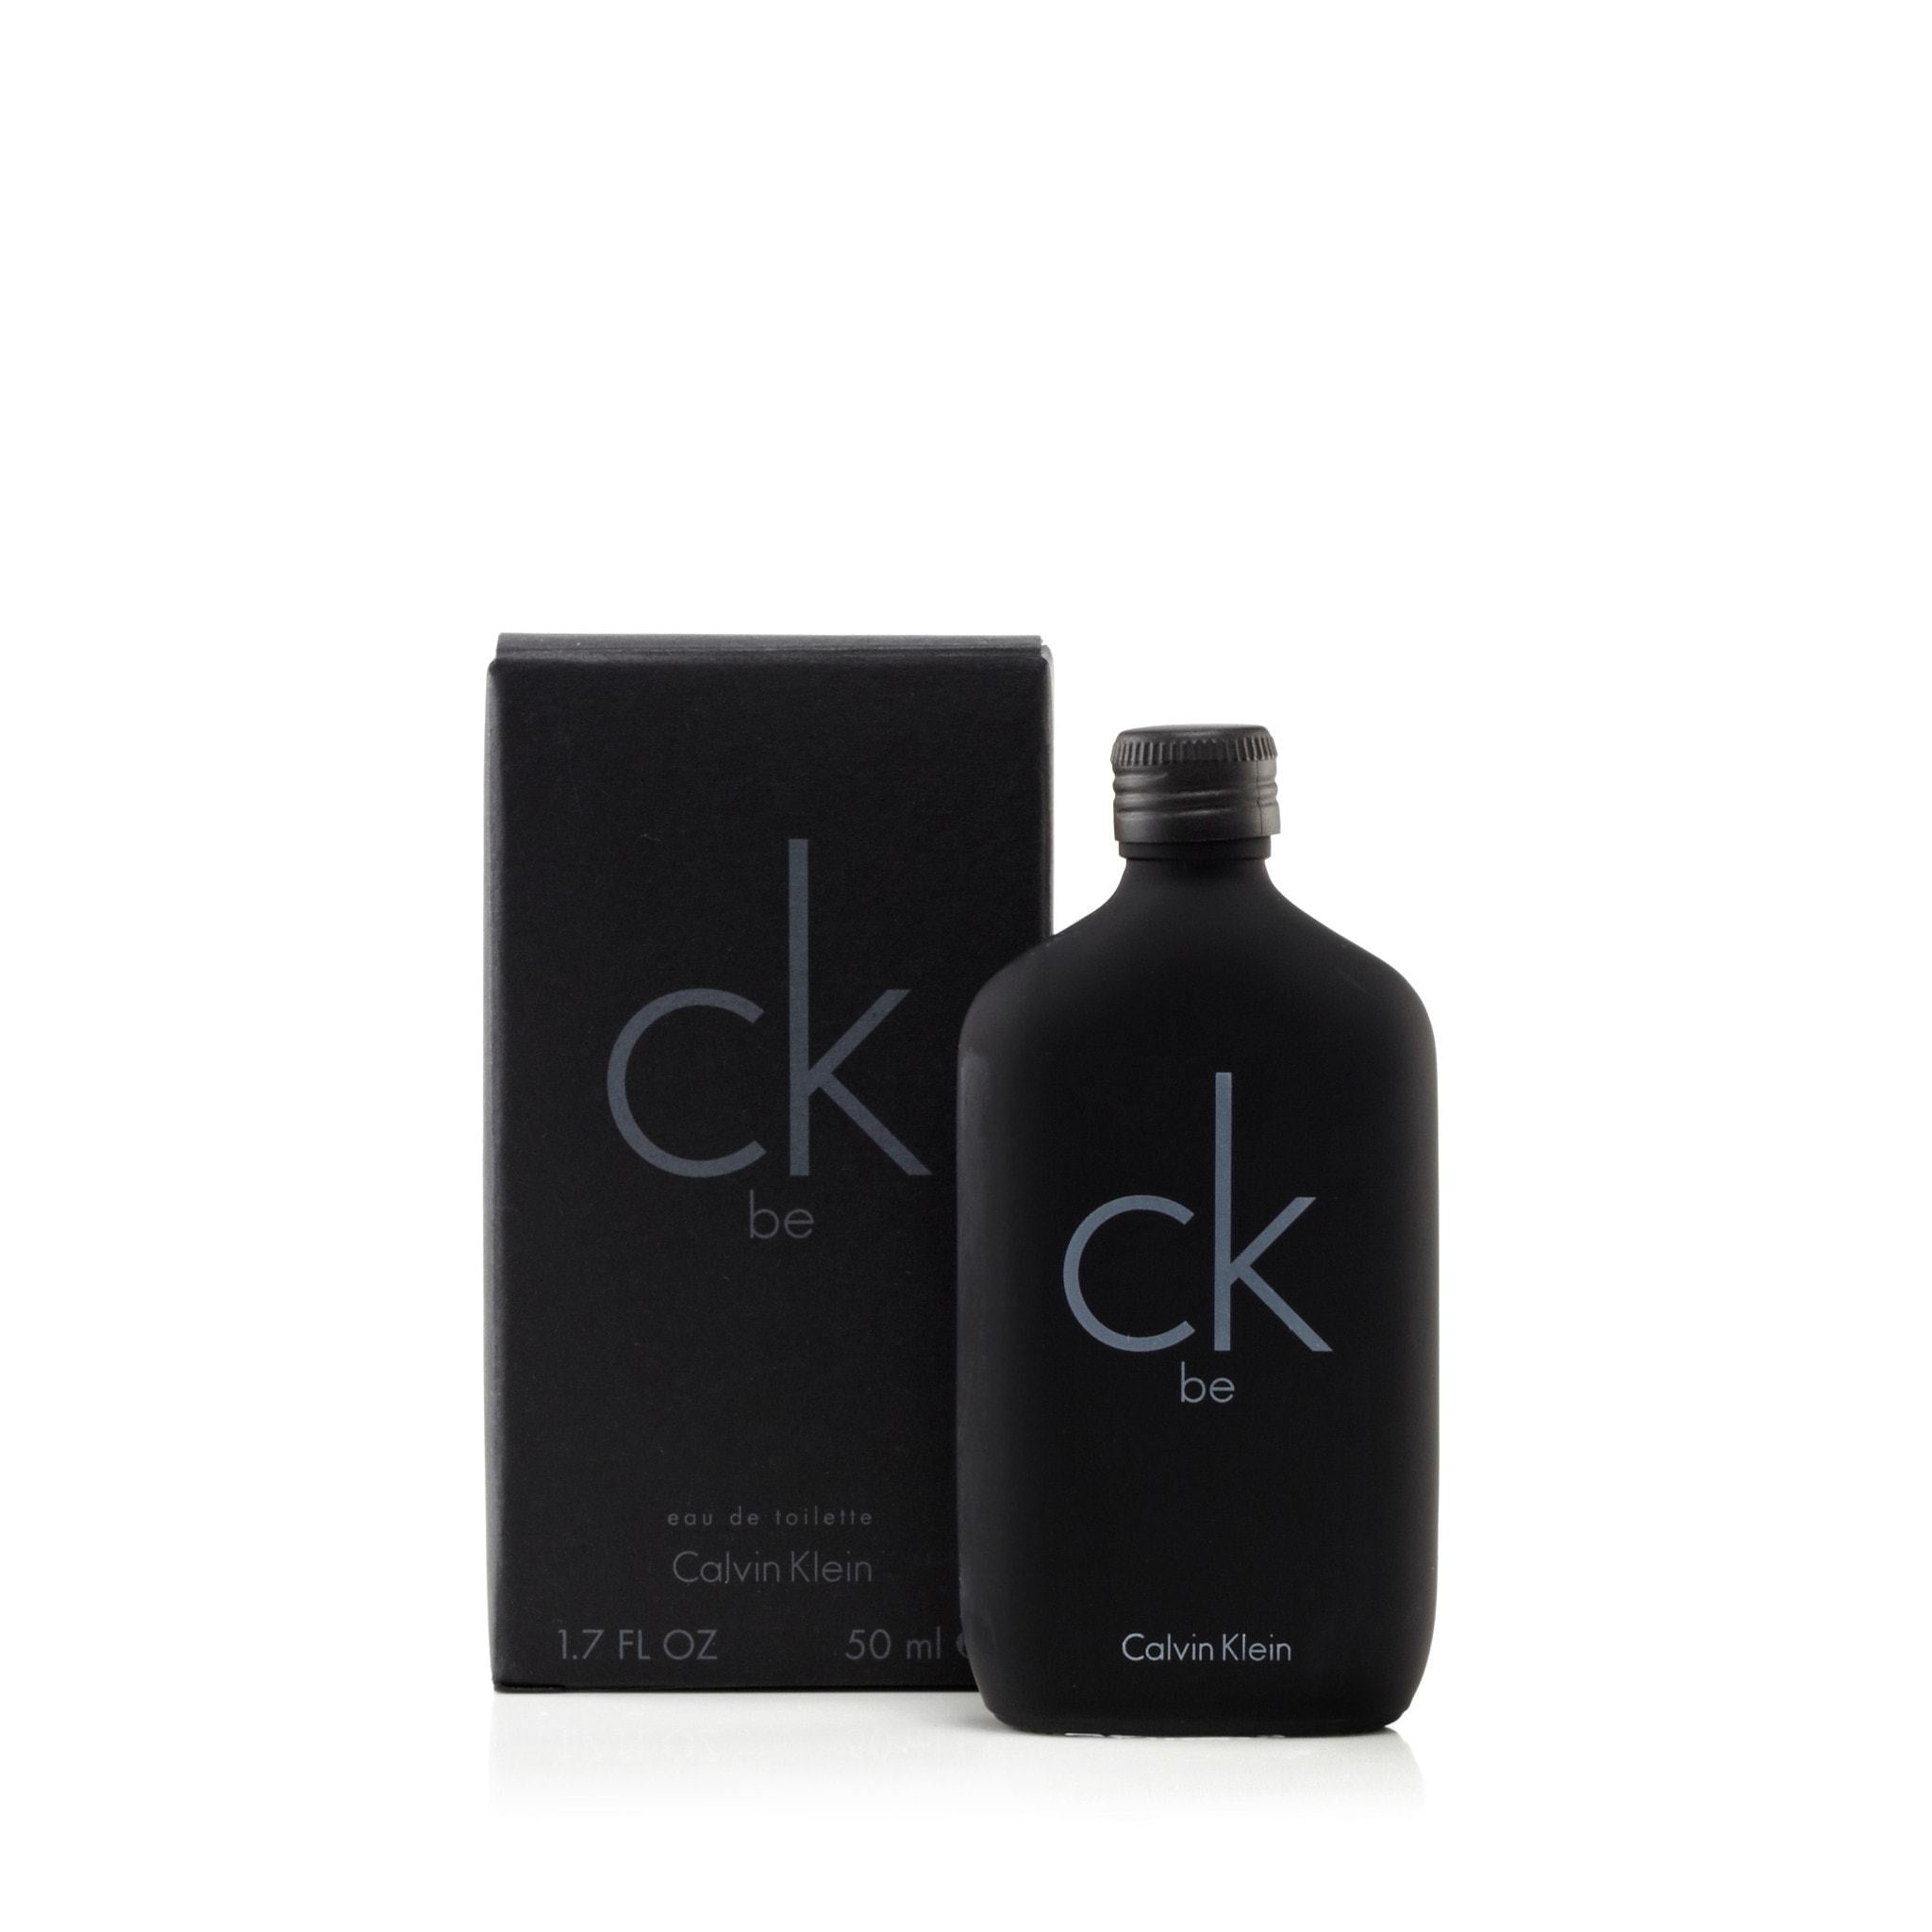 Calvin Klein Ck Be Fragrances for sale